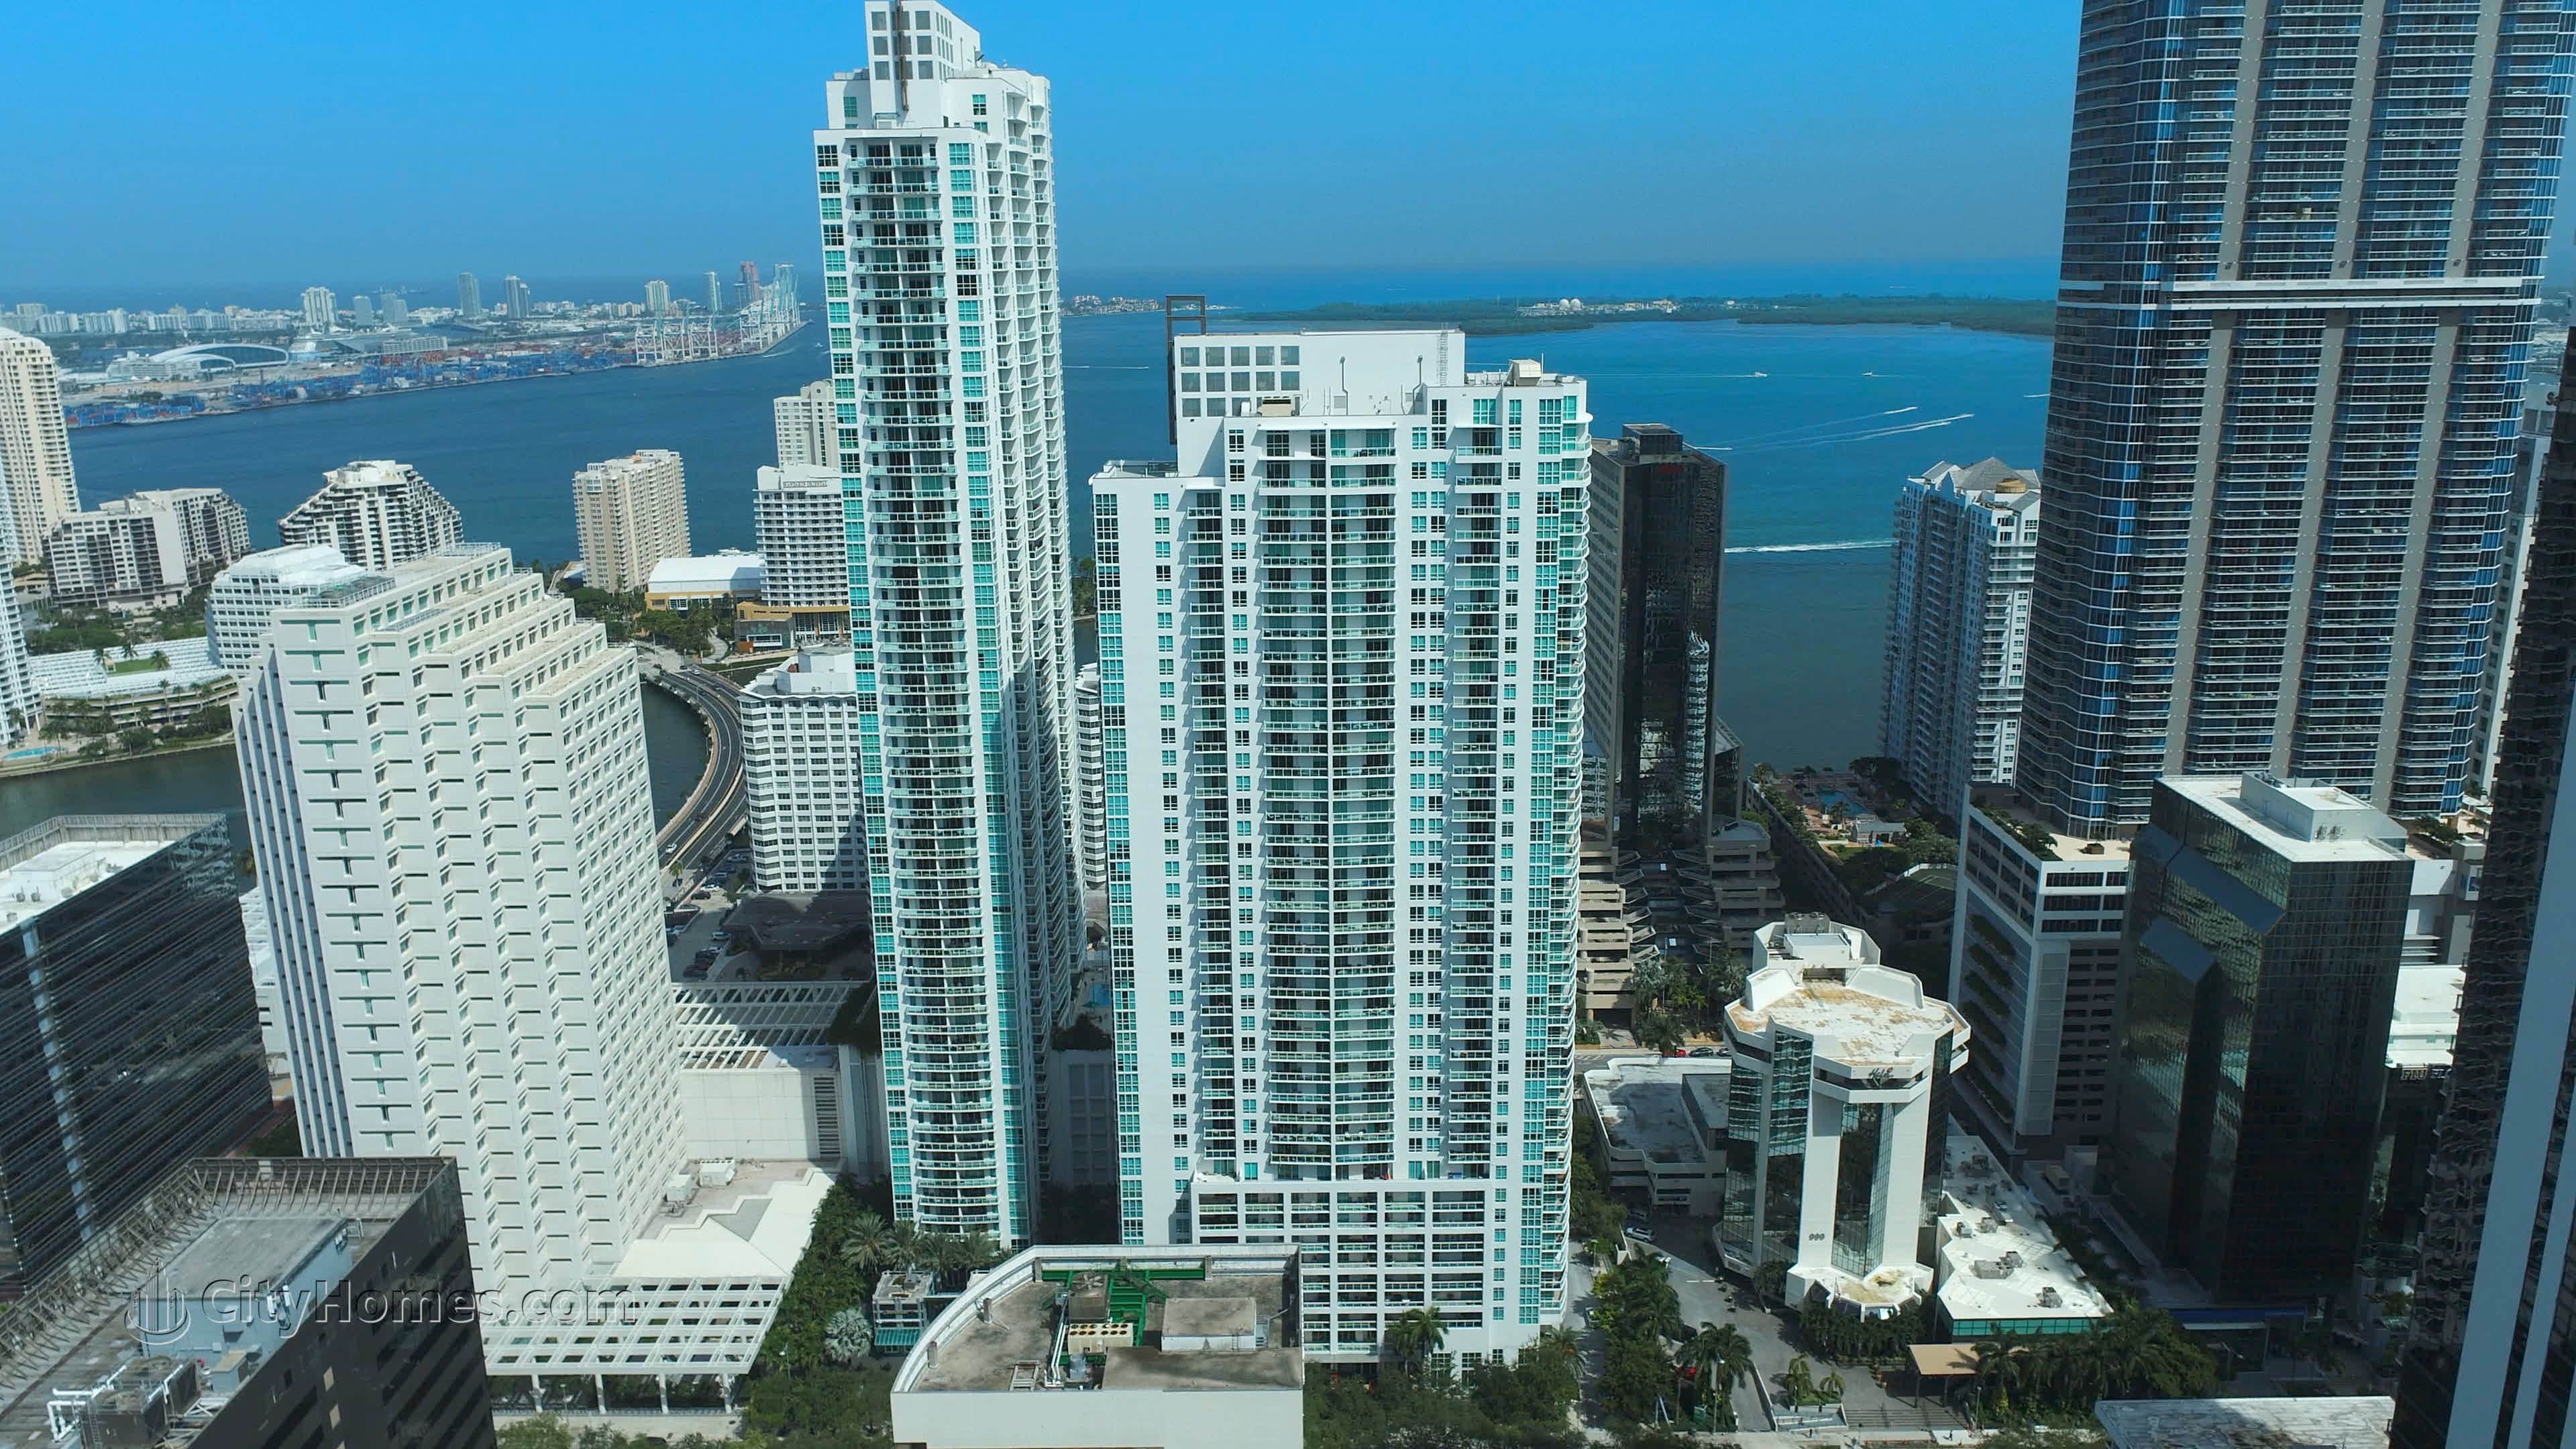 2. Plaza on Brickell - 950 Tower gebouw op 950 Brickell Bay Drive Avenue, Miami, FL 33131